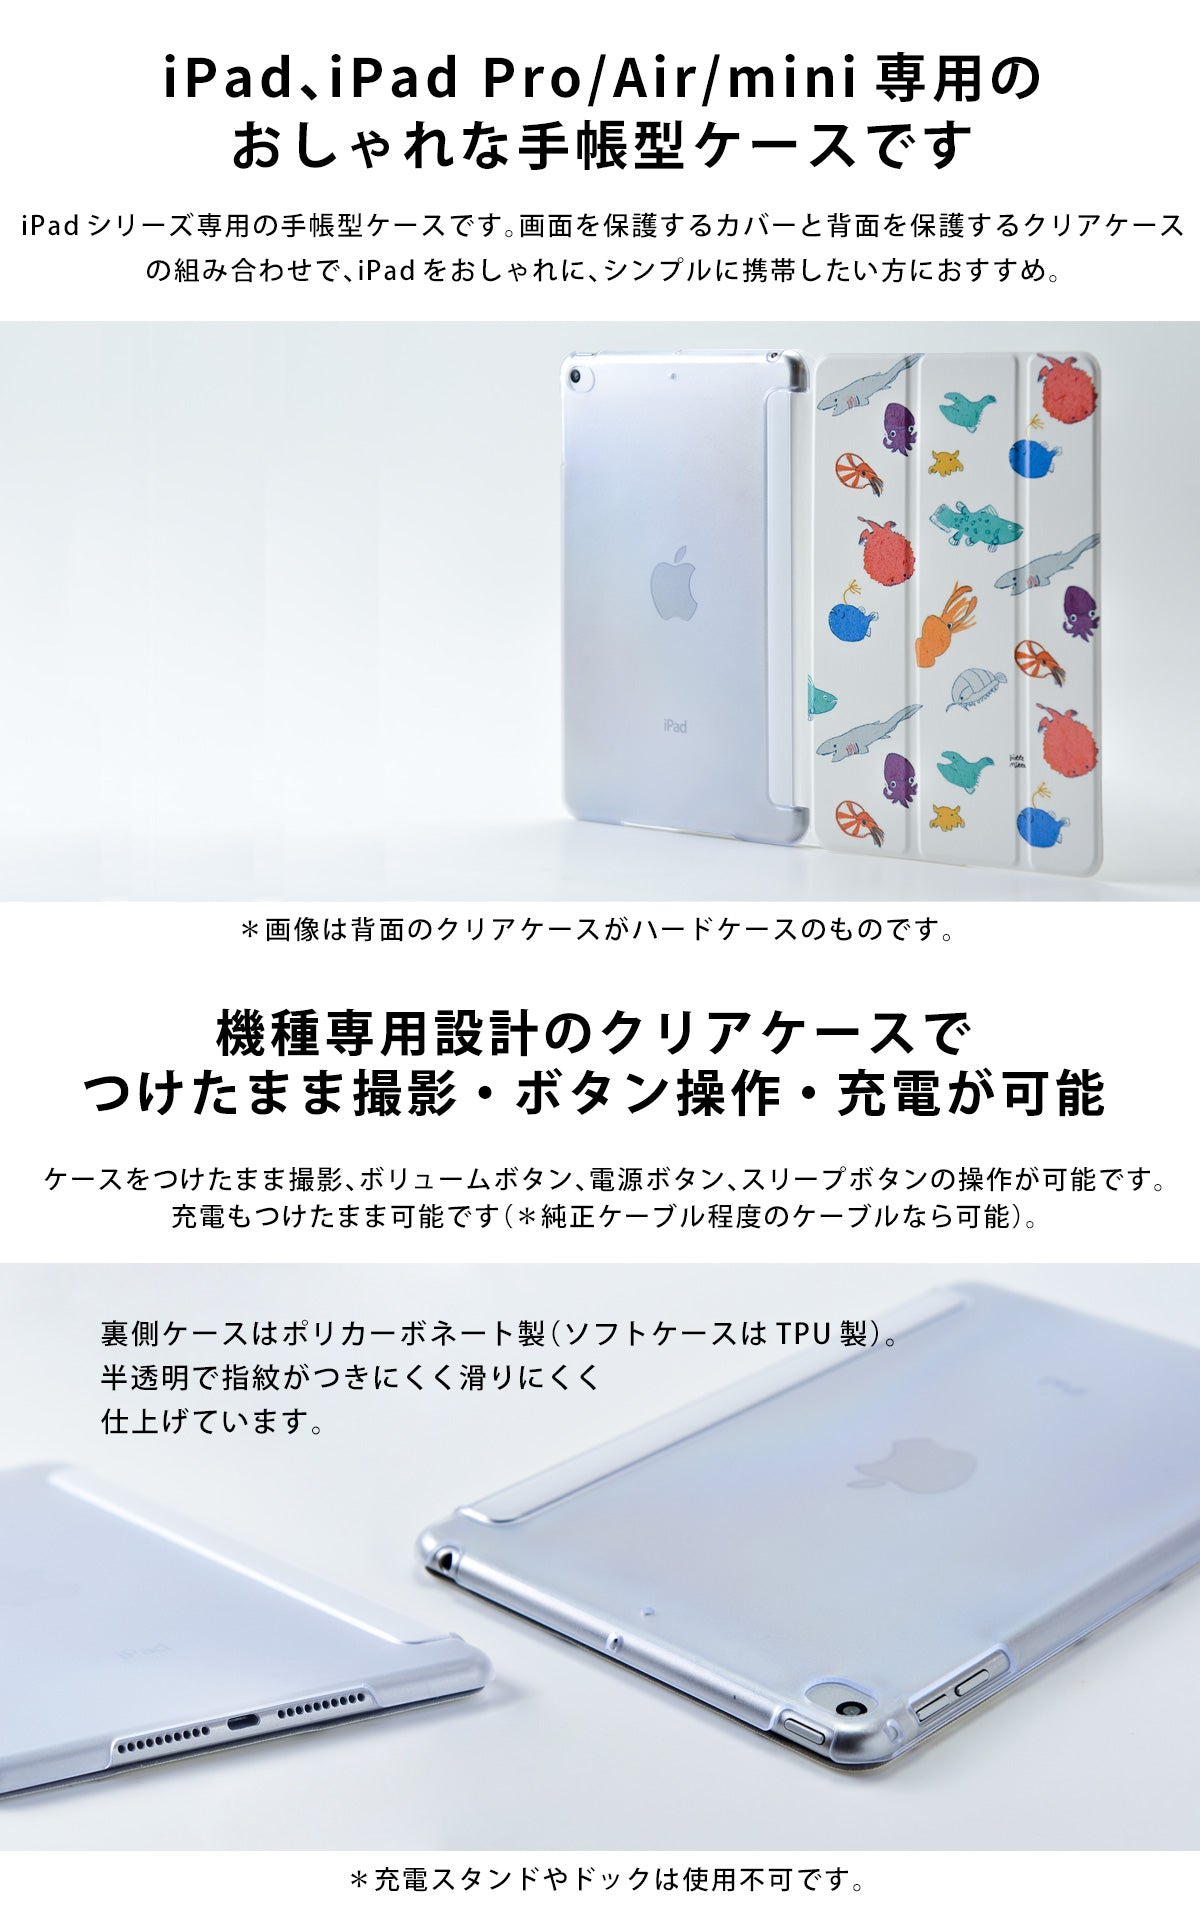 iPad ケース Air 4/3/2/1 10.9インチ iPadAir4 iPadケース おしゃれ かわいい 北欧 馬 ウマ